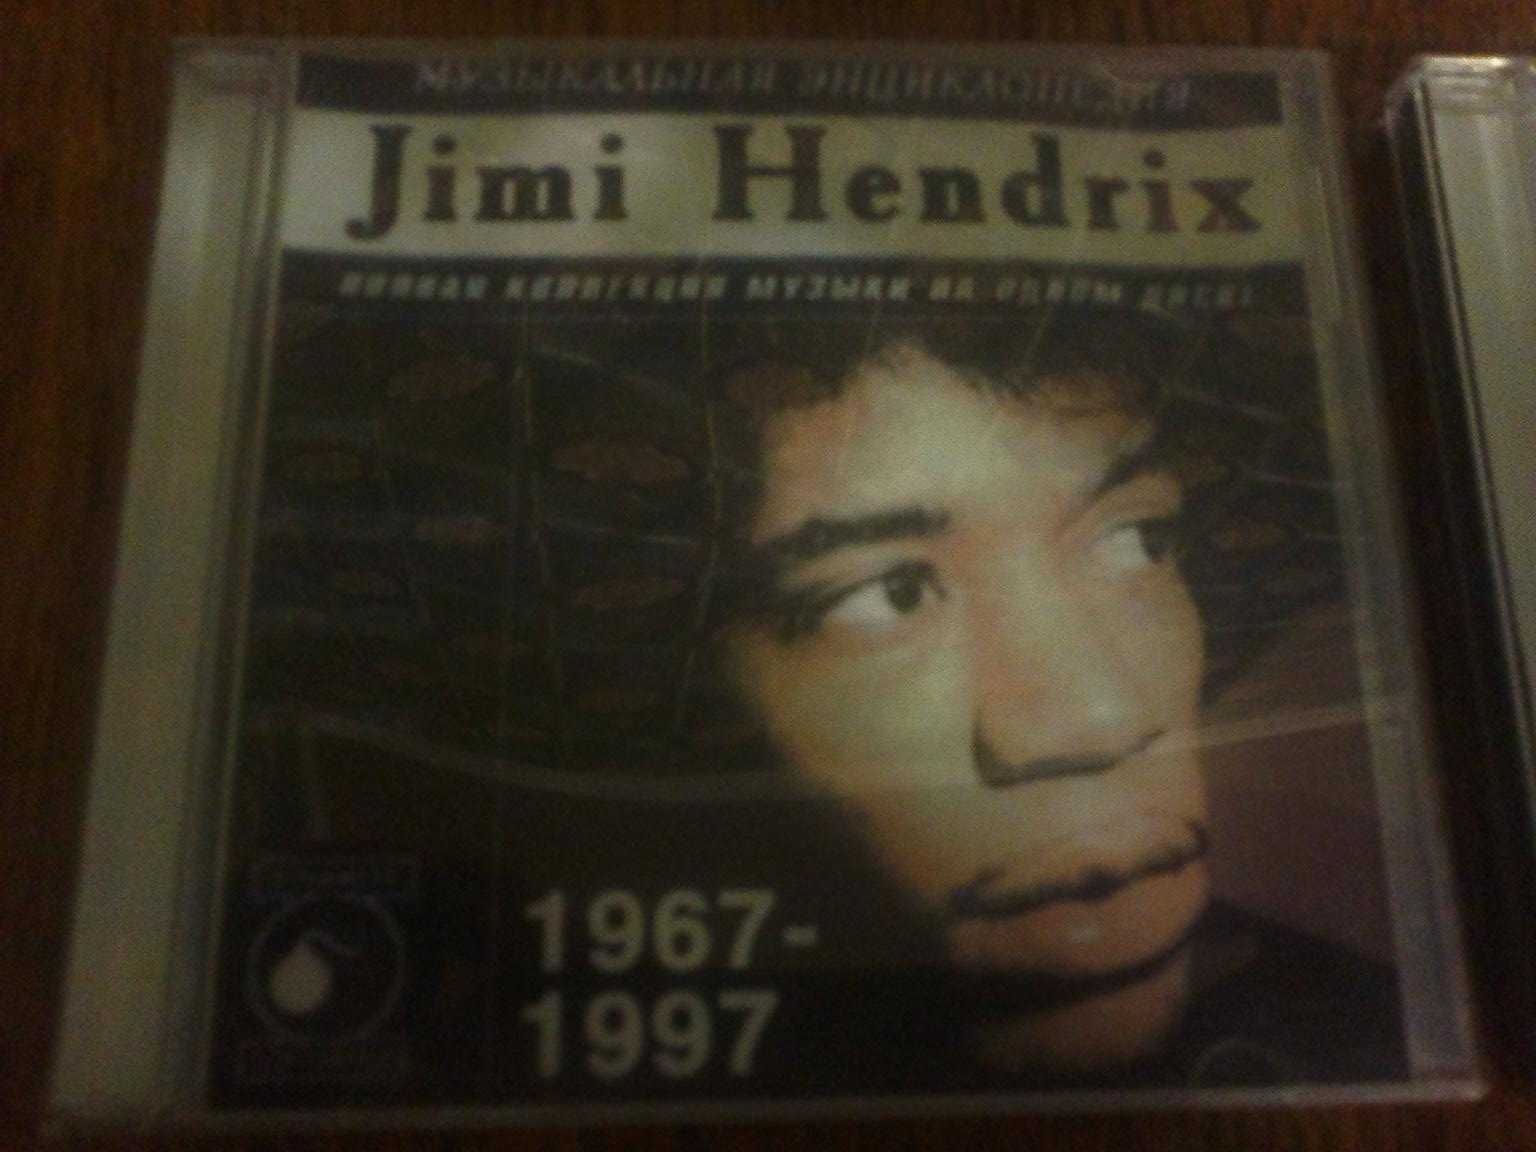 Jimi Hendrix, в коробочке mp3 диск (музыка, фото, биография)!